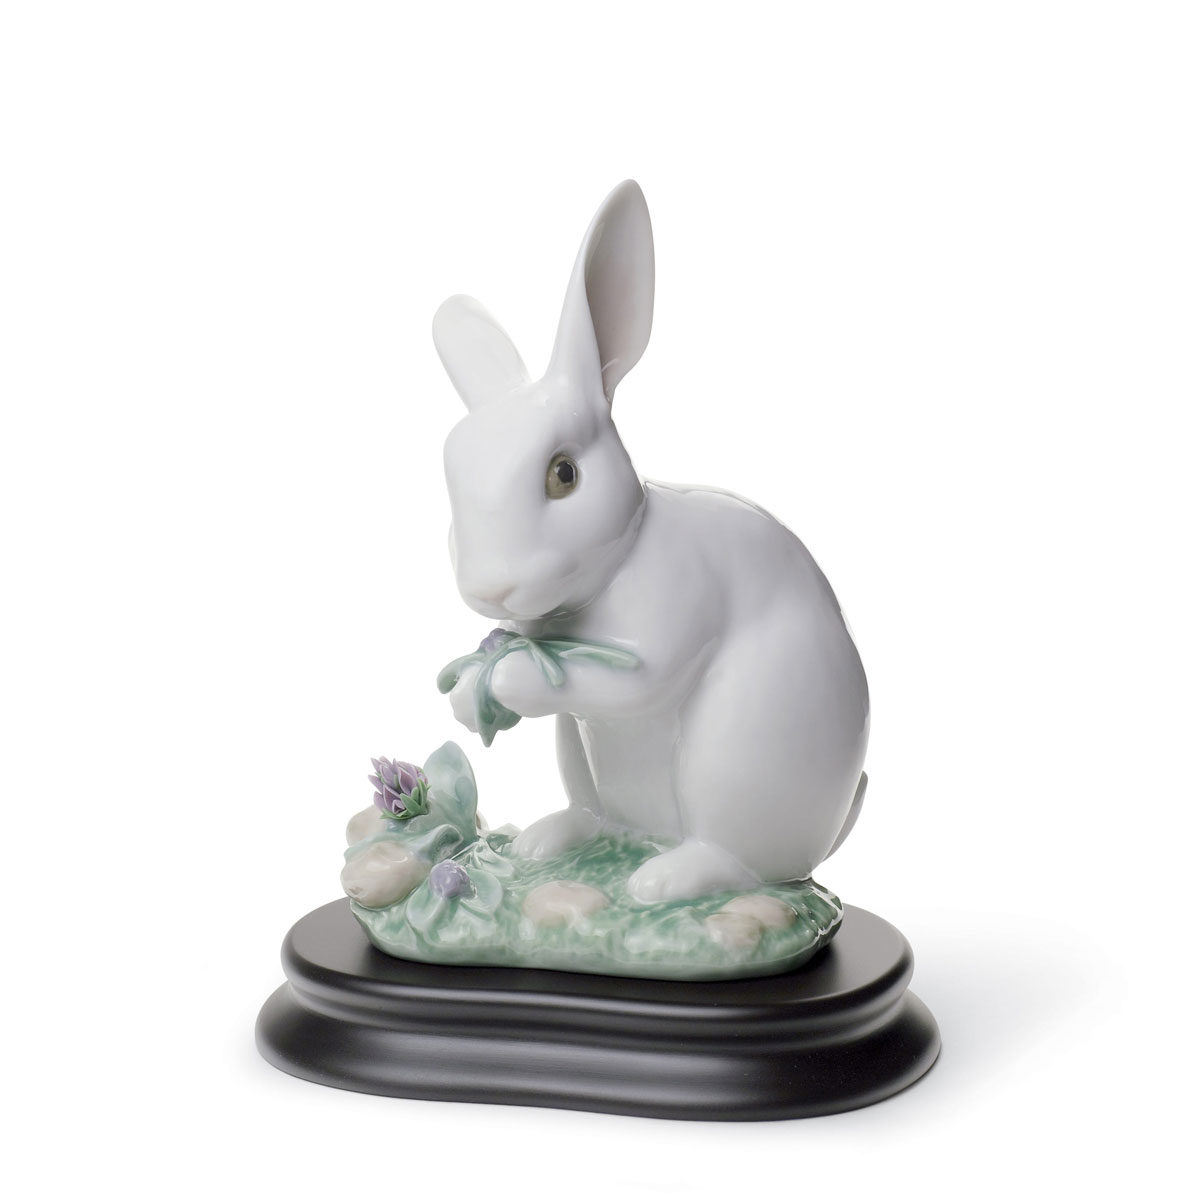 Lladro Classic Sculpture, The Rabbit Figurine